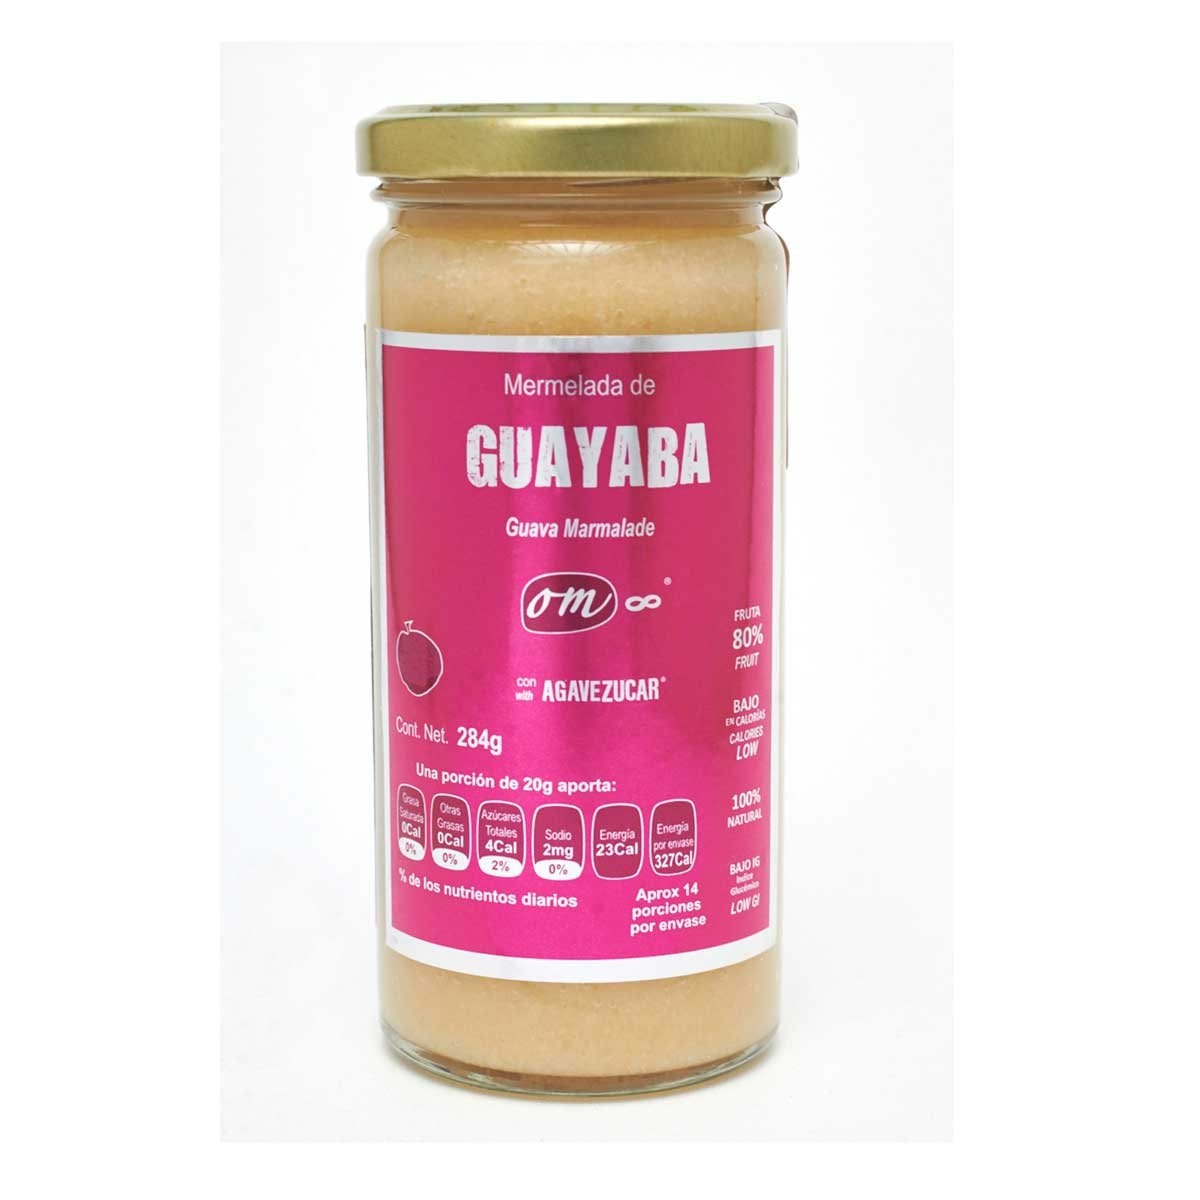  Mermelada de Guayaba con Agavezucar 284 G Om8